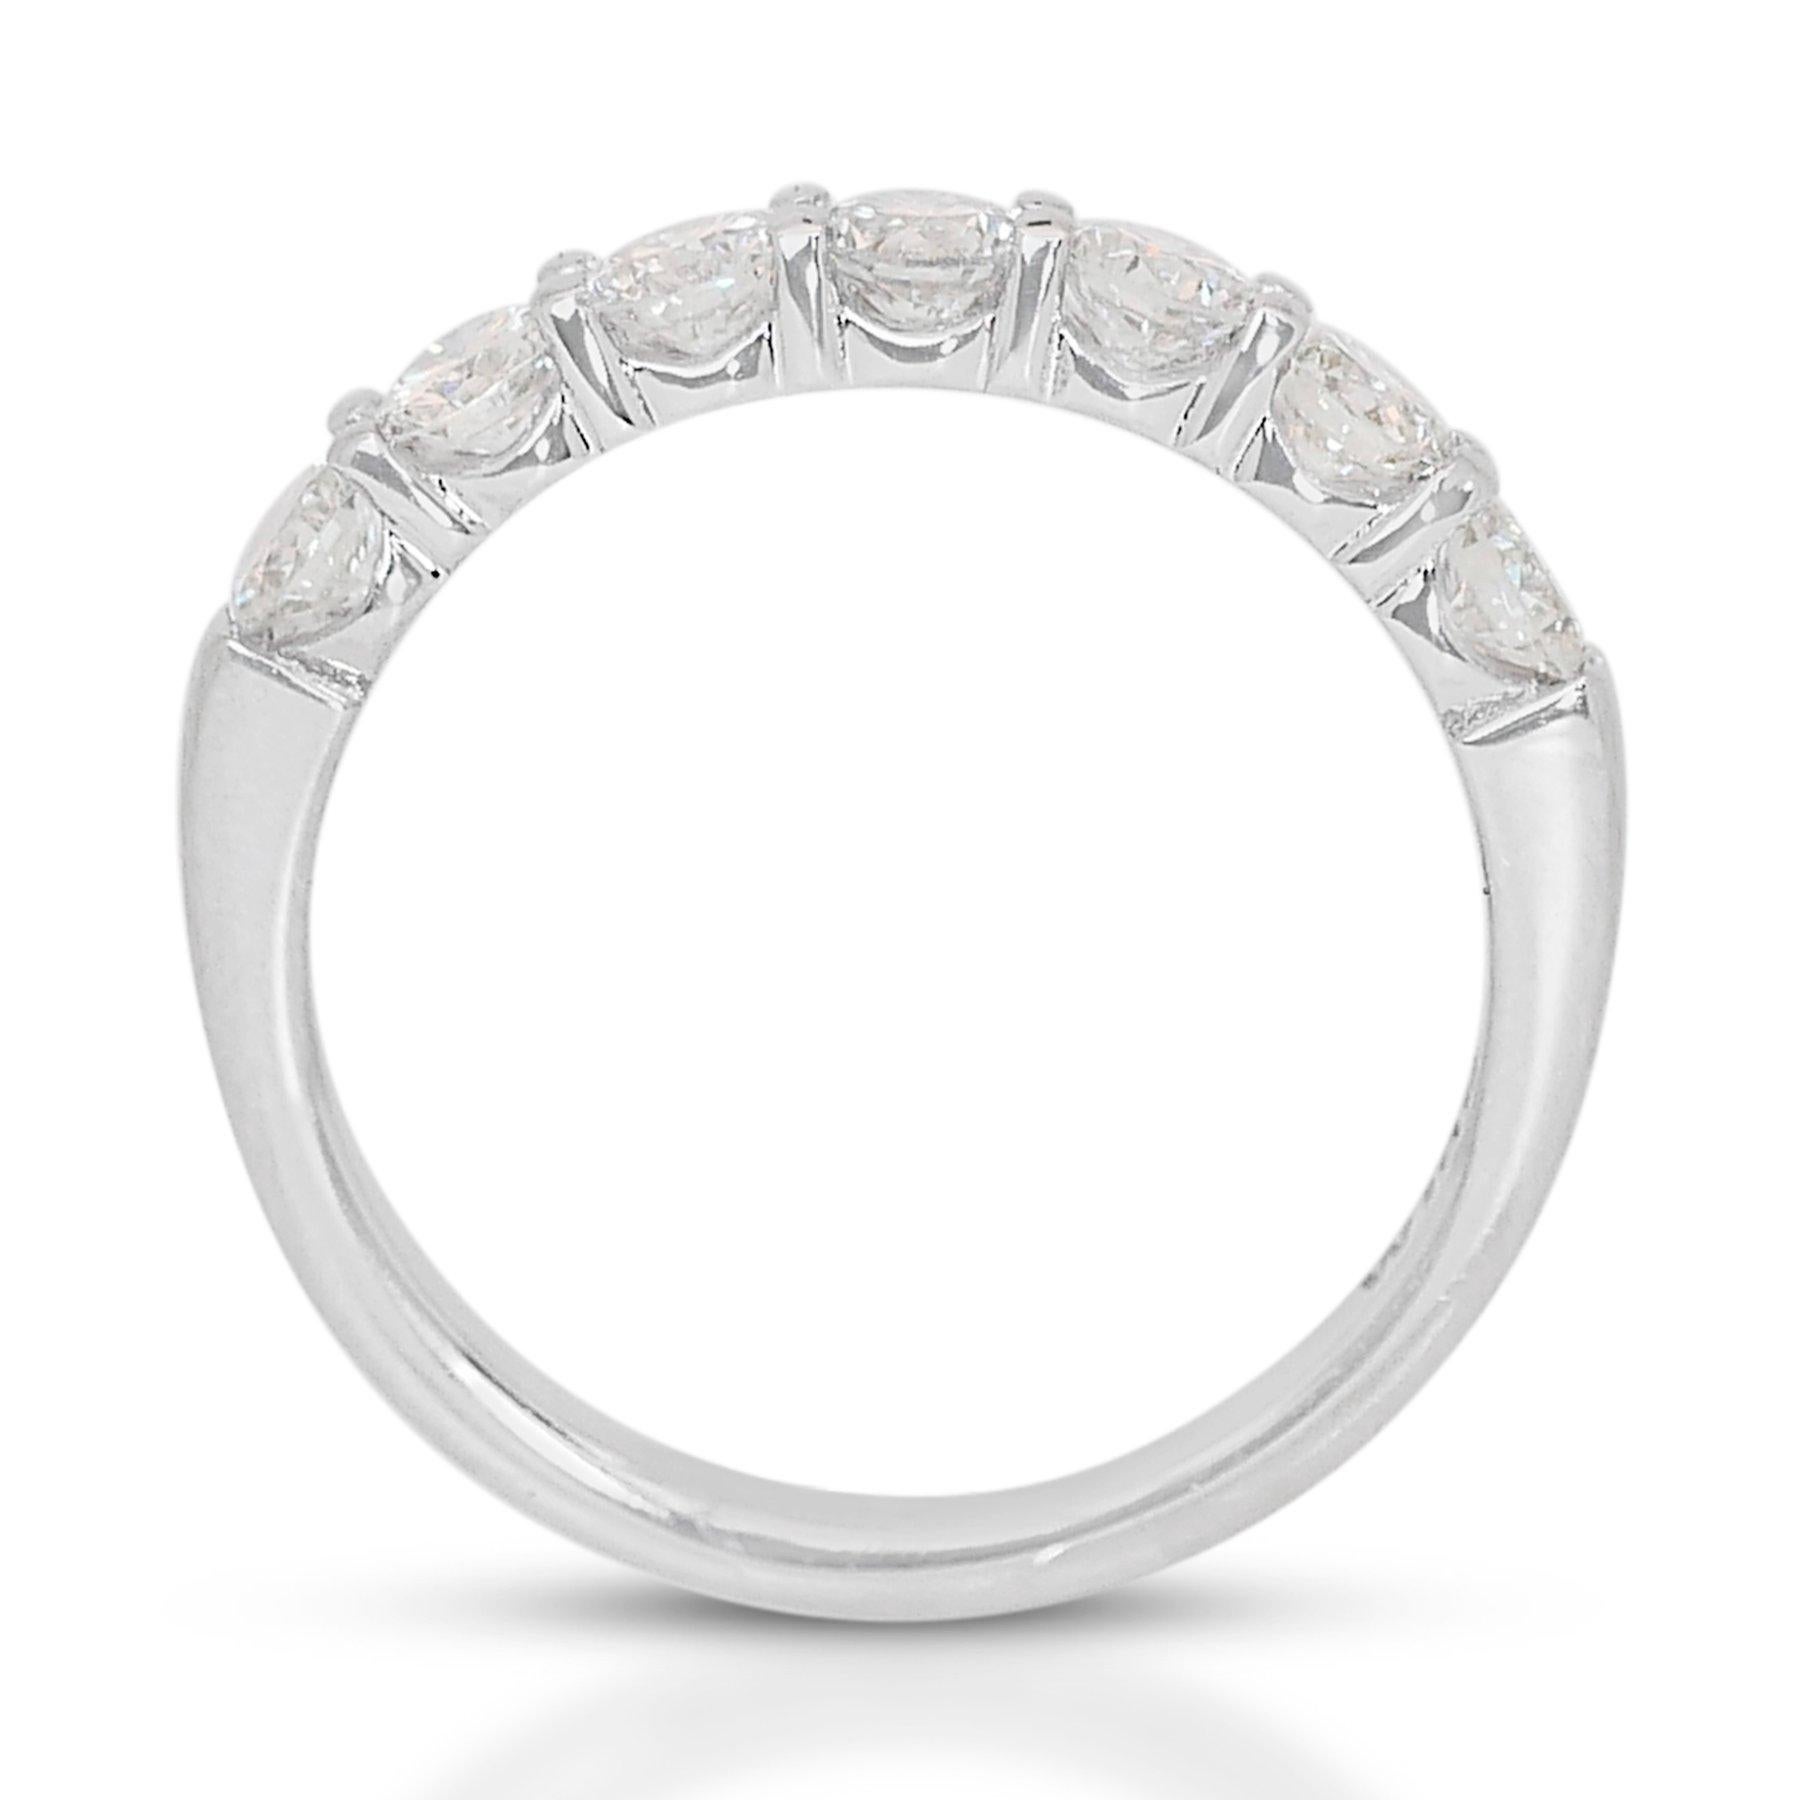 Stunning 2.10ct Diamonds 7-Stone Ring in 18k White Gold - GIA Certified 1